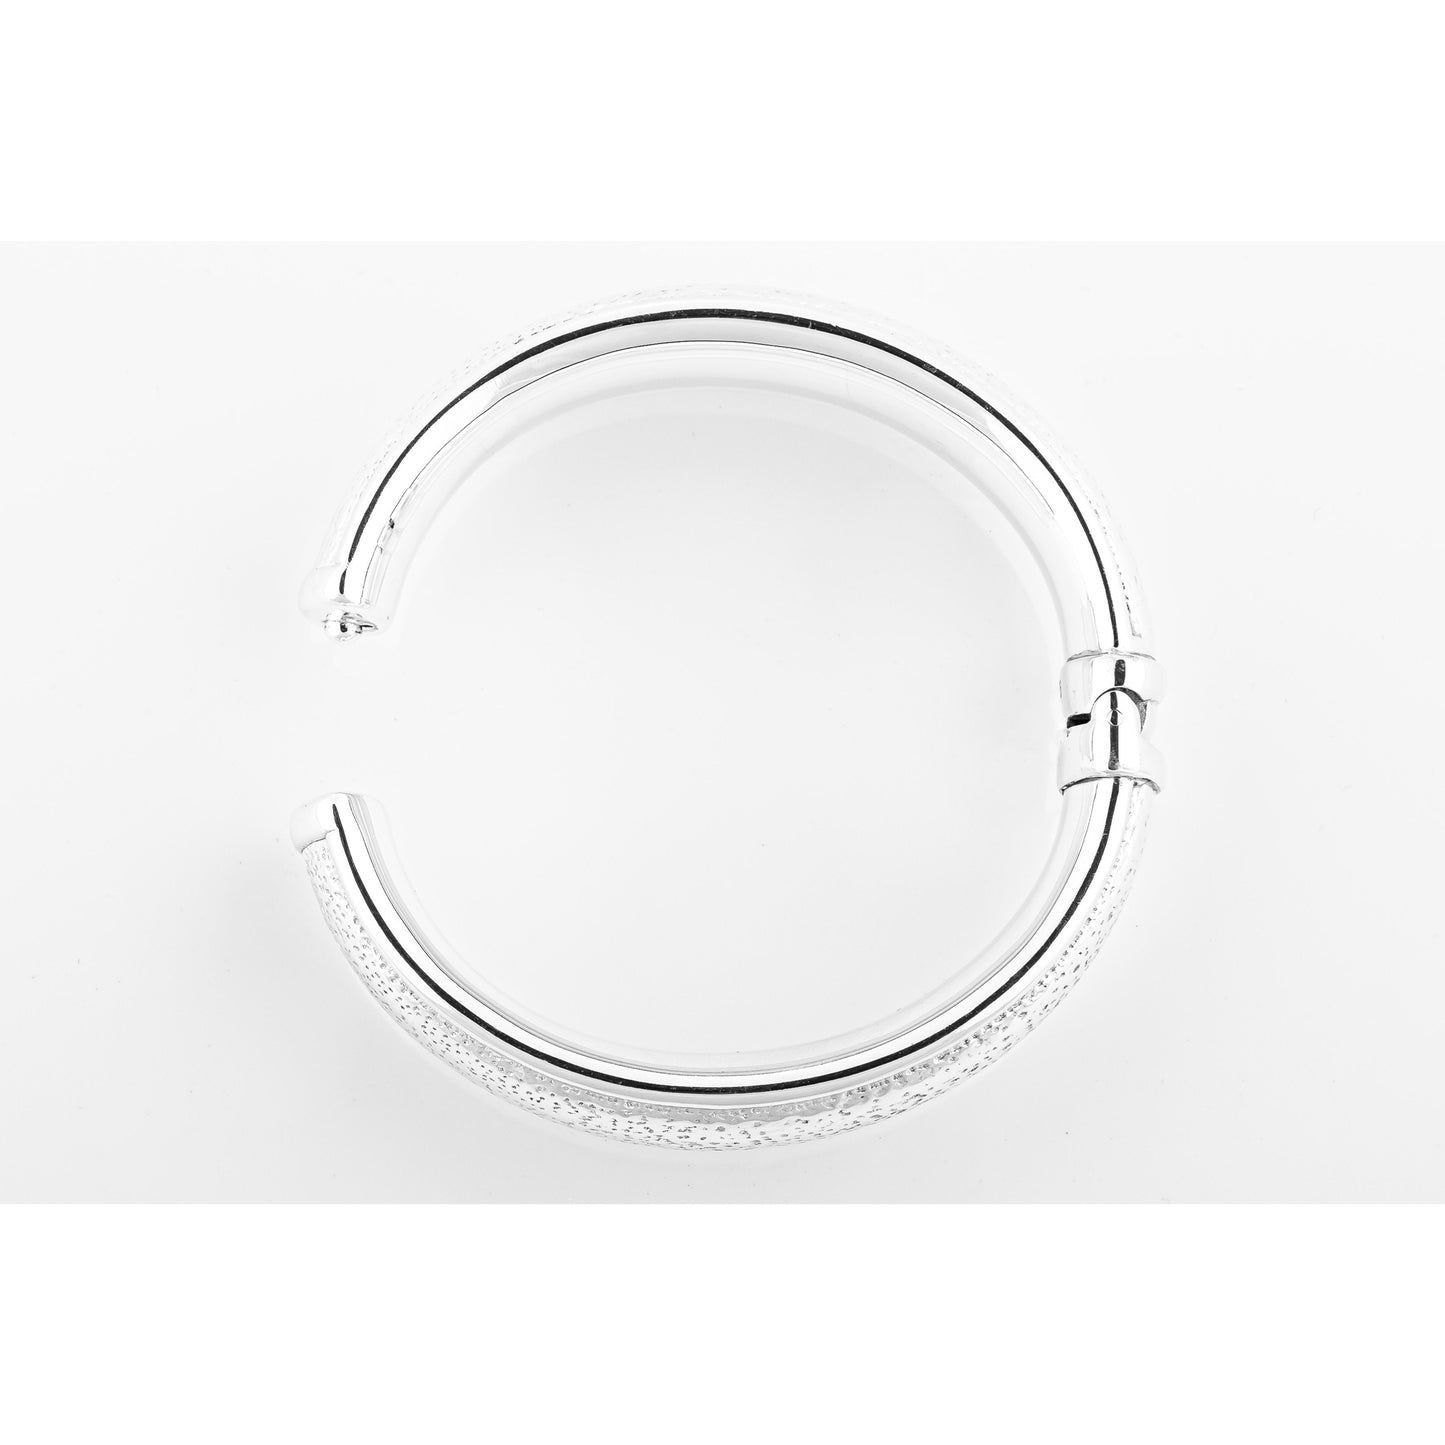 Silver circular bracelet on white